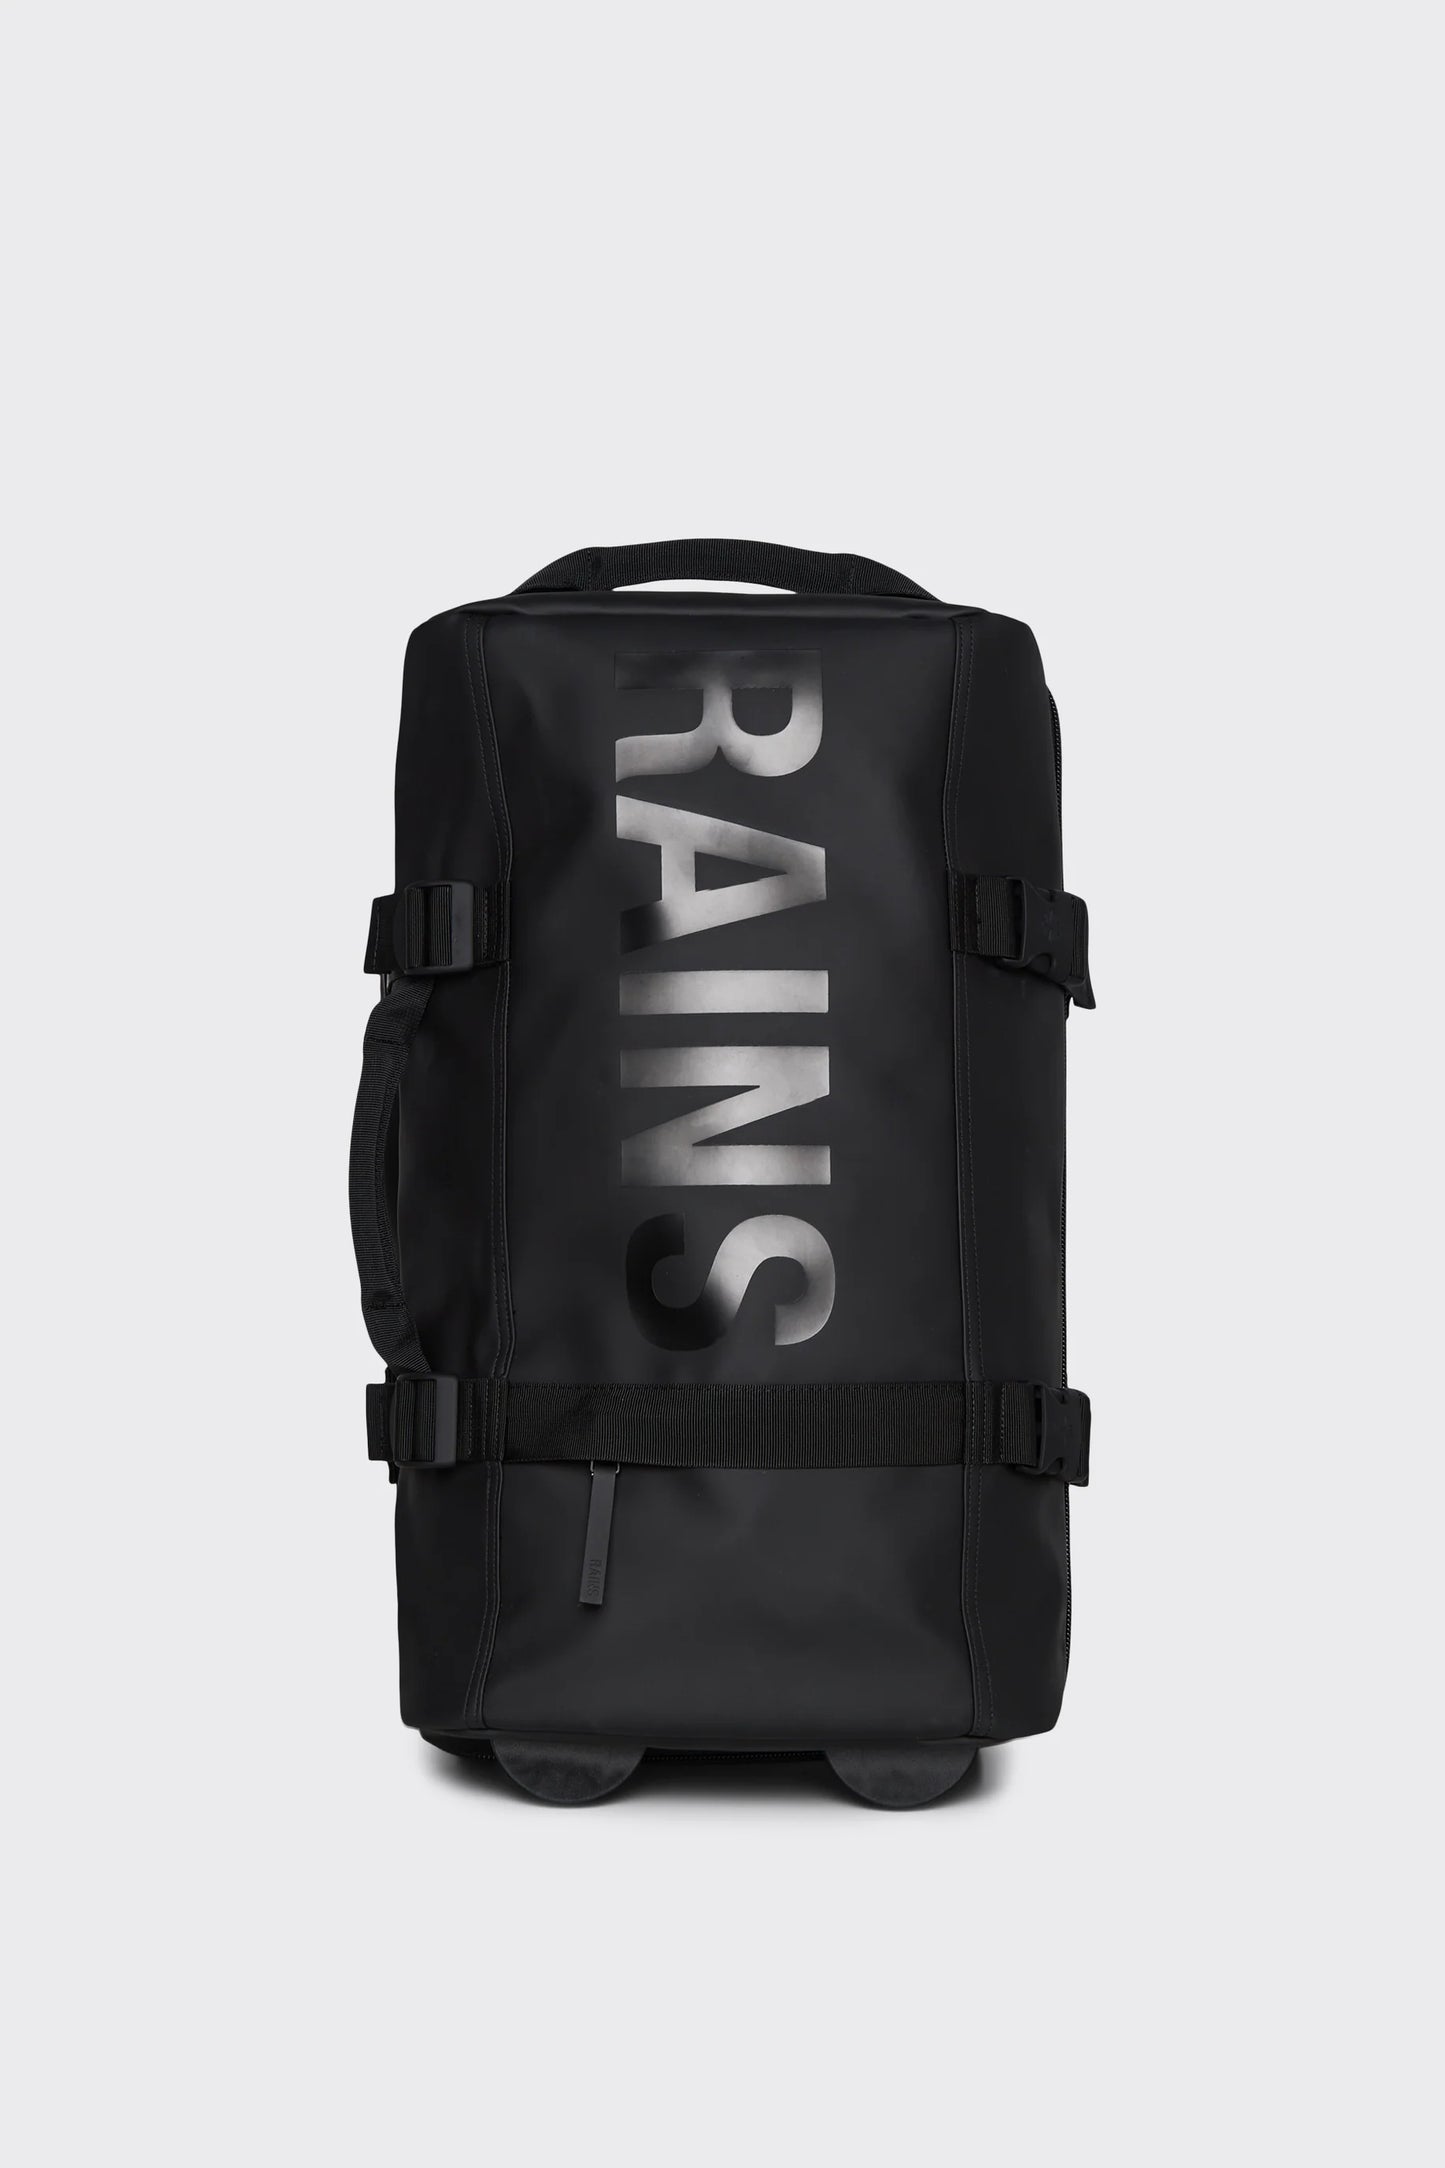 
                  
                    Travel Bag Small - Black
                  
                